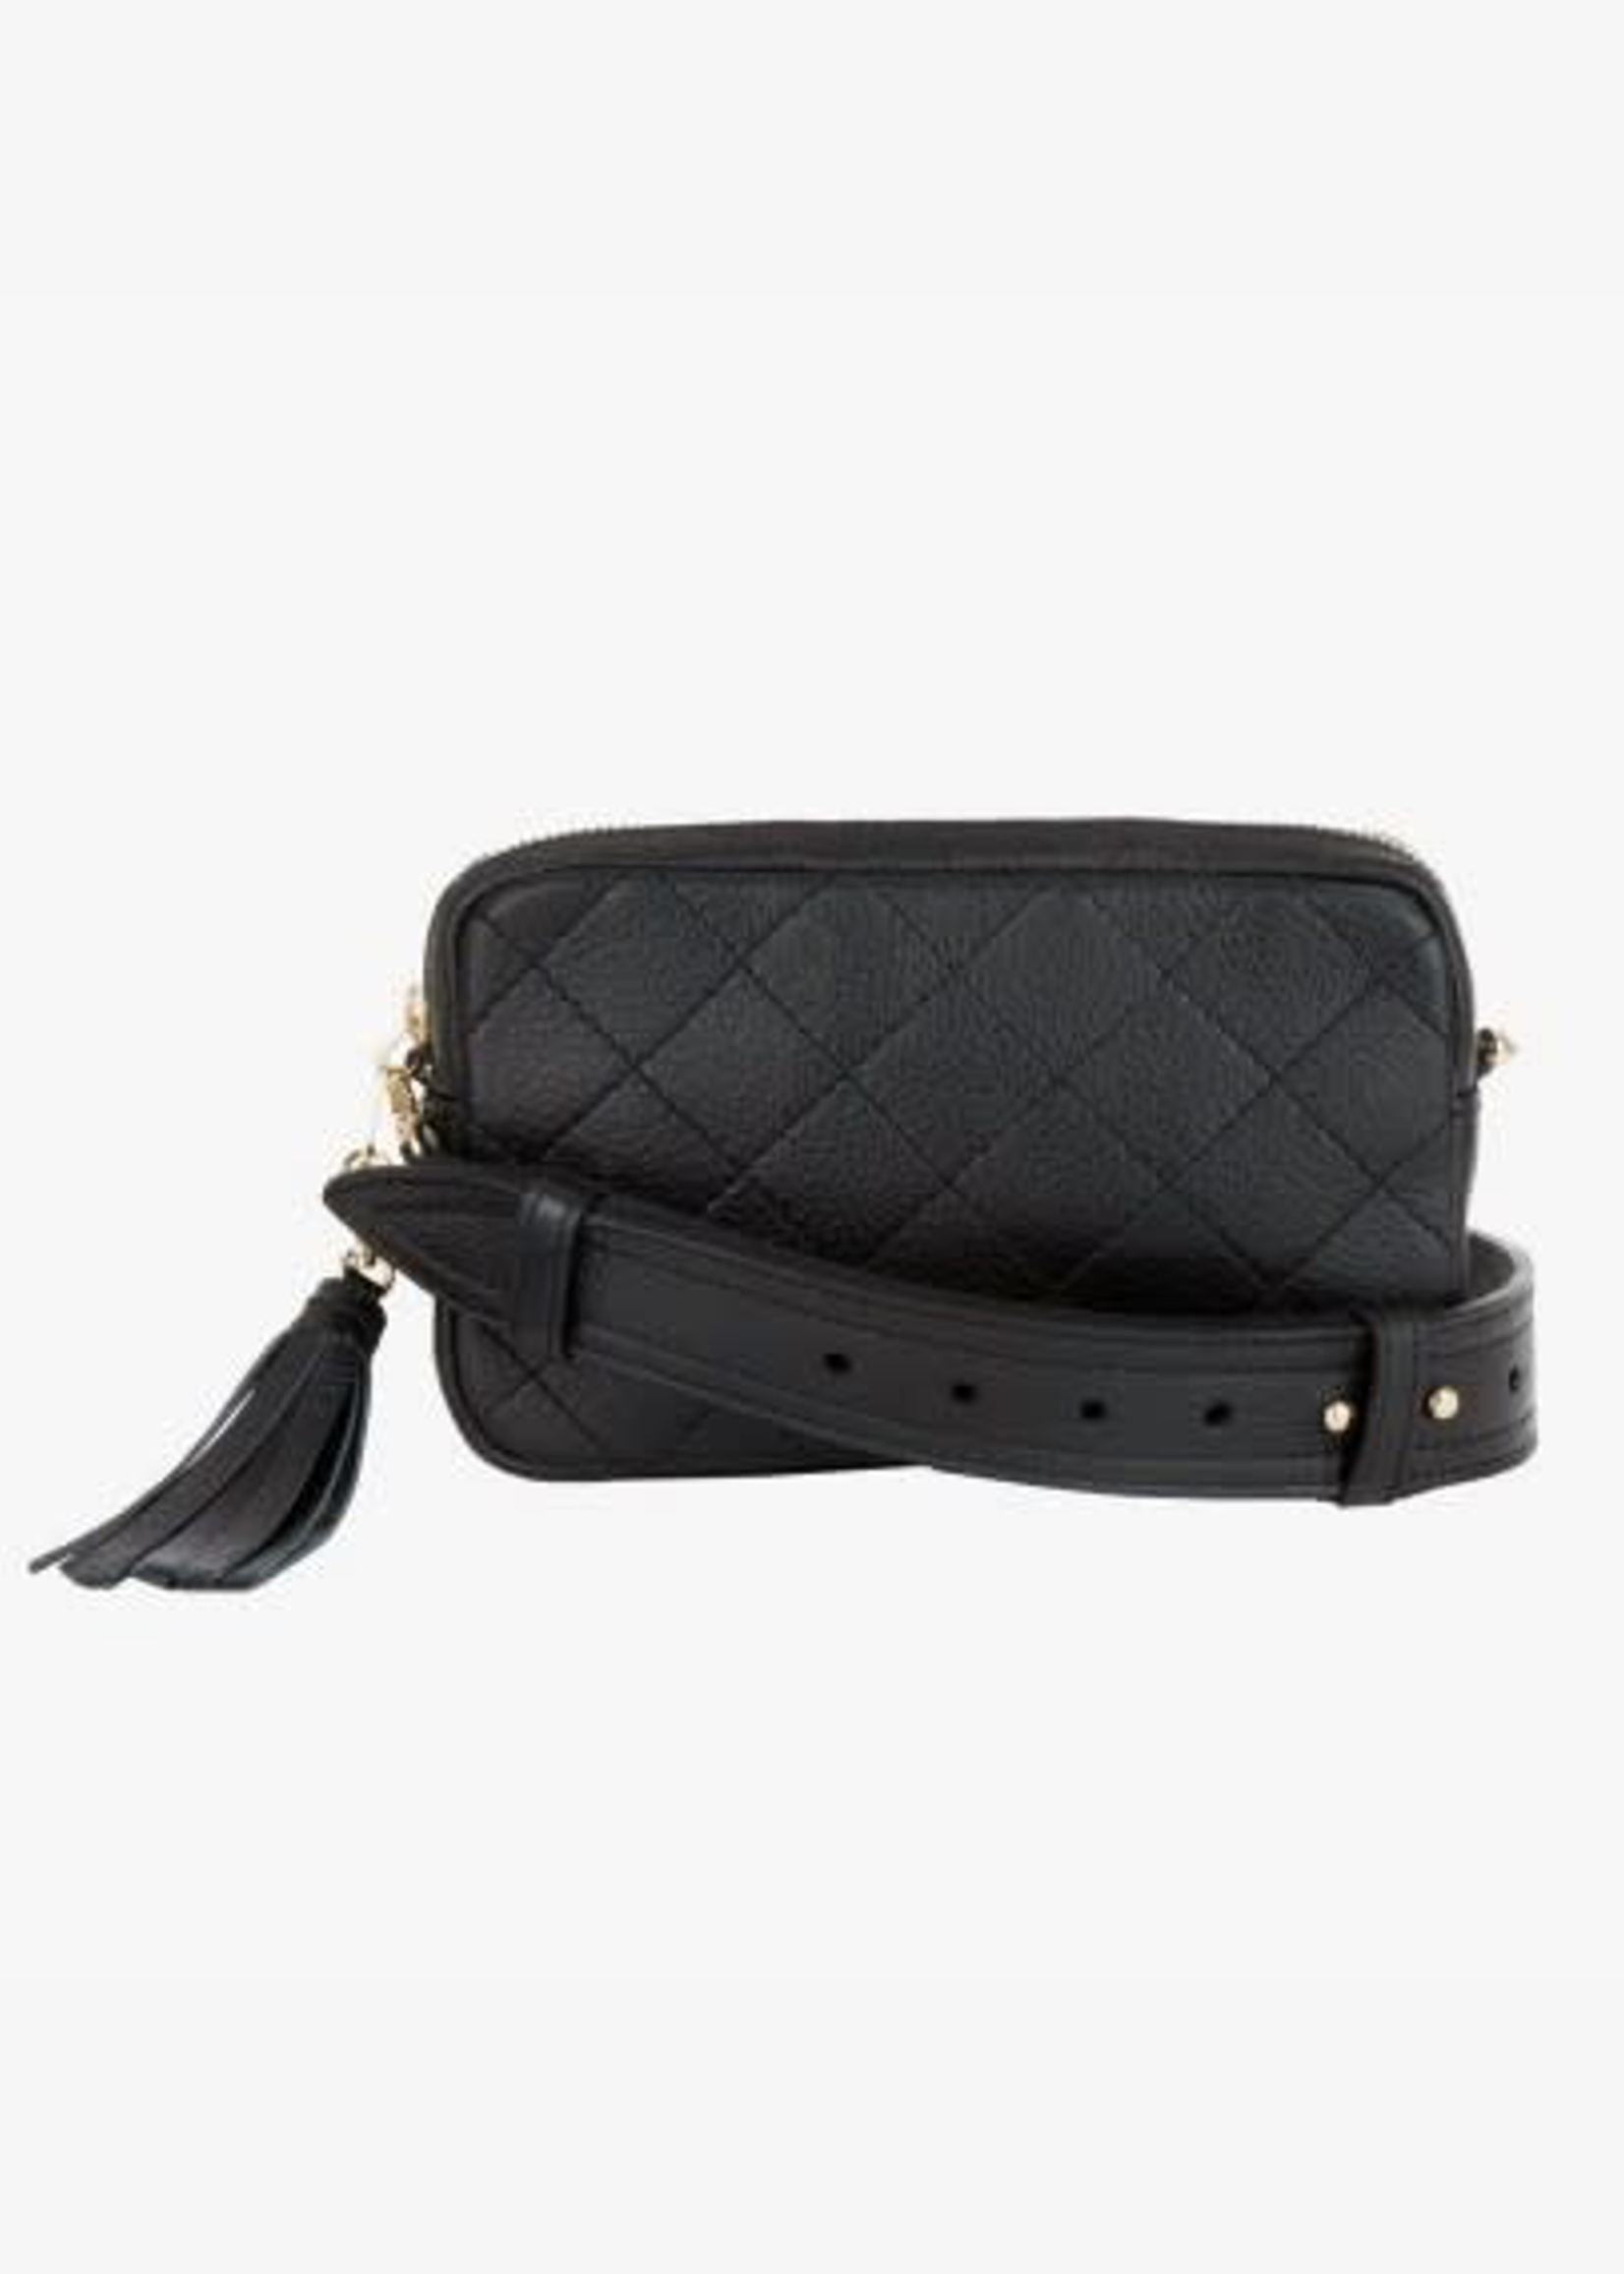 BRAVE Leather Vittoria Pebbled Nappa Leather Bag - Black/Gold